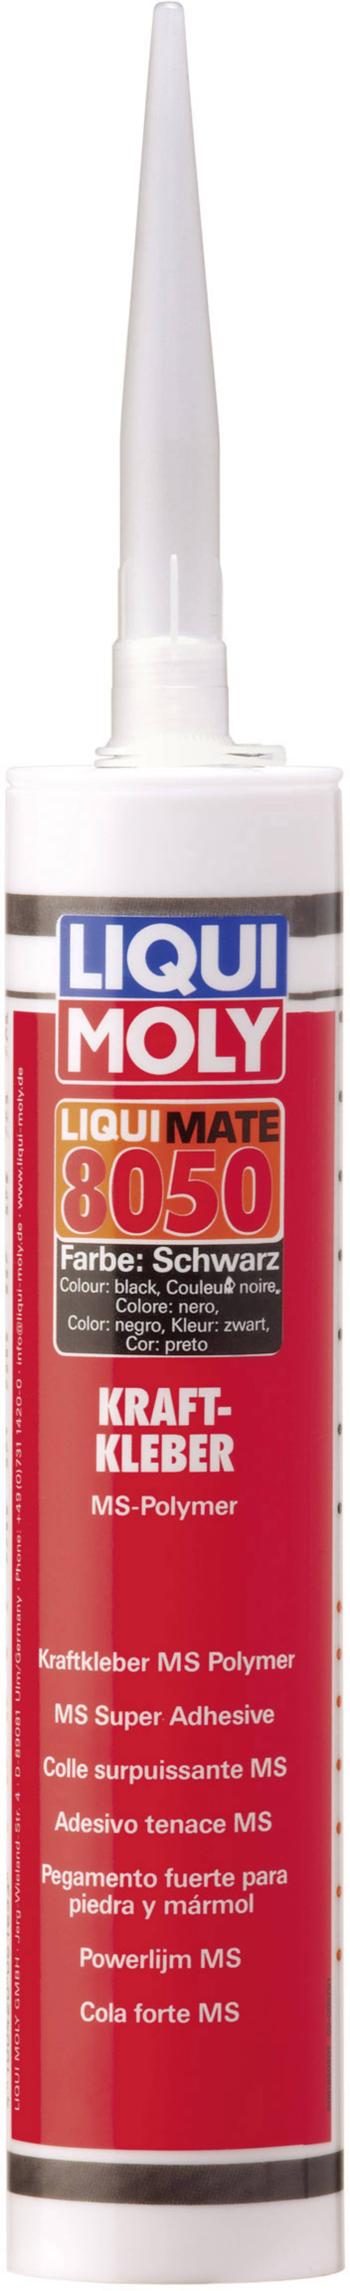 Liqui Moly Liquimate 8050 lepidlo 6165 290 ml